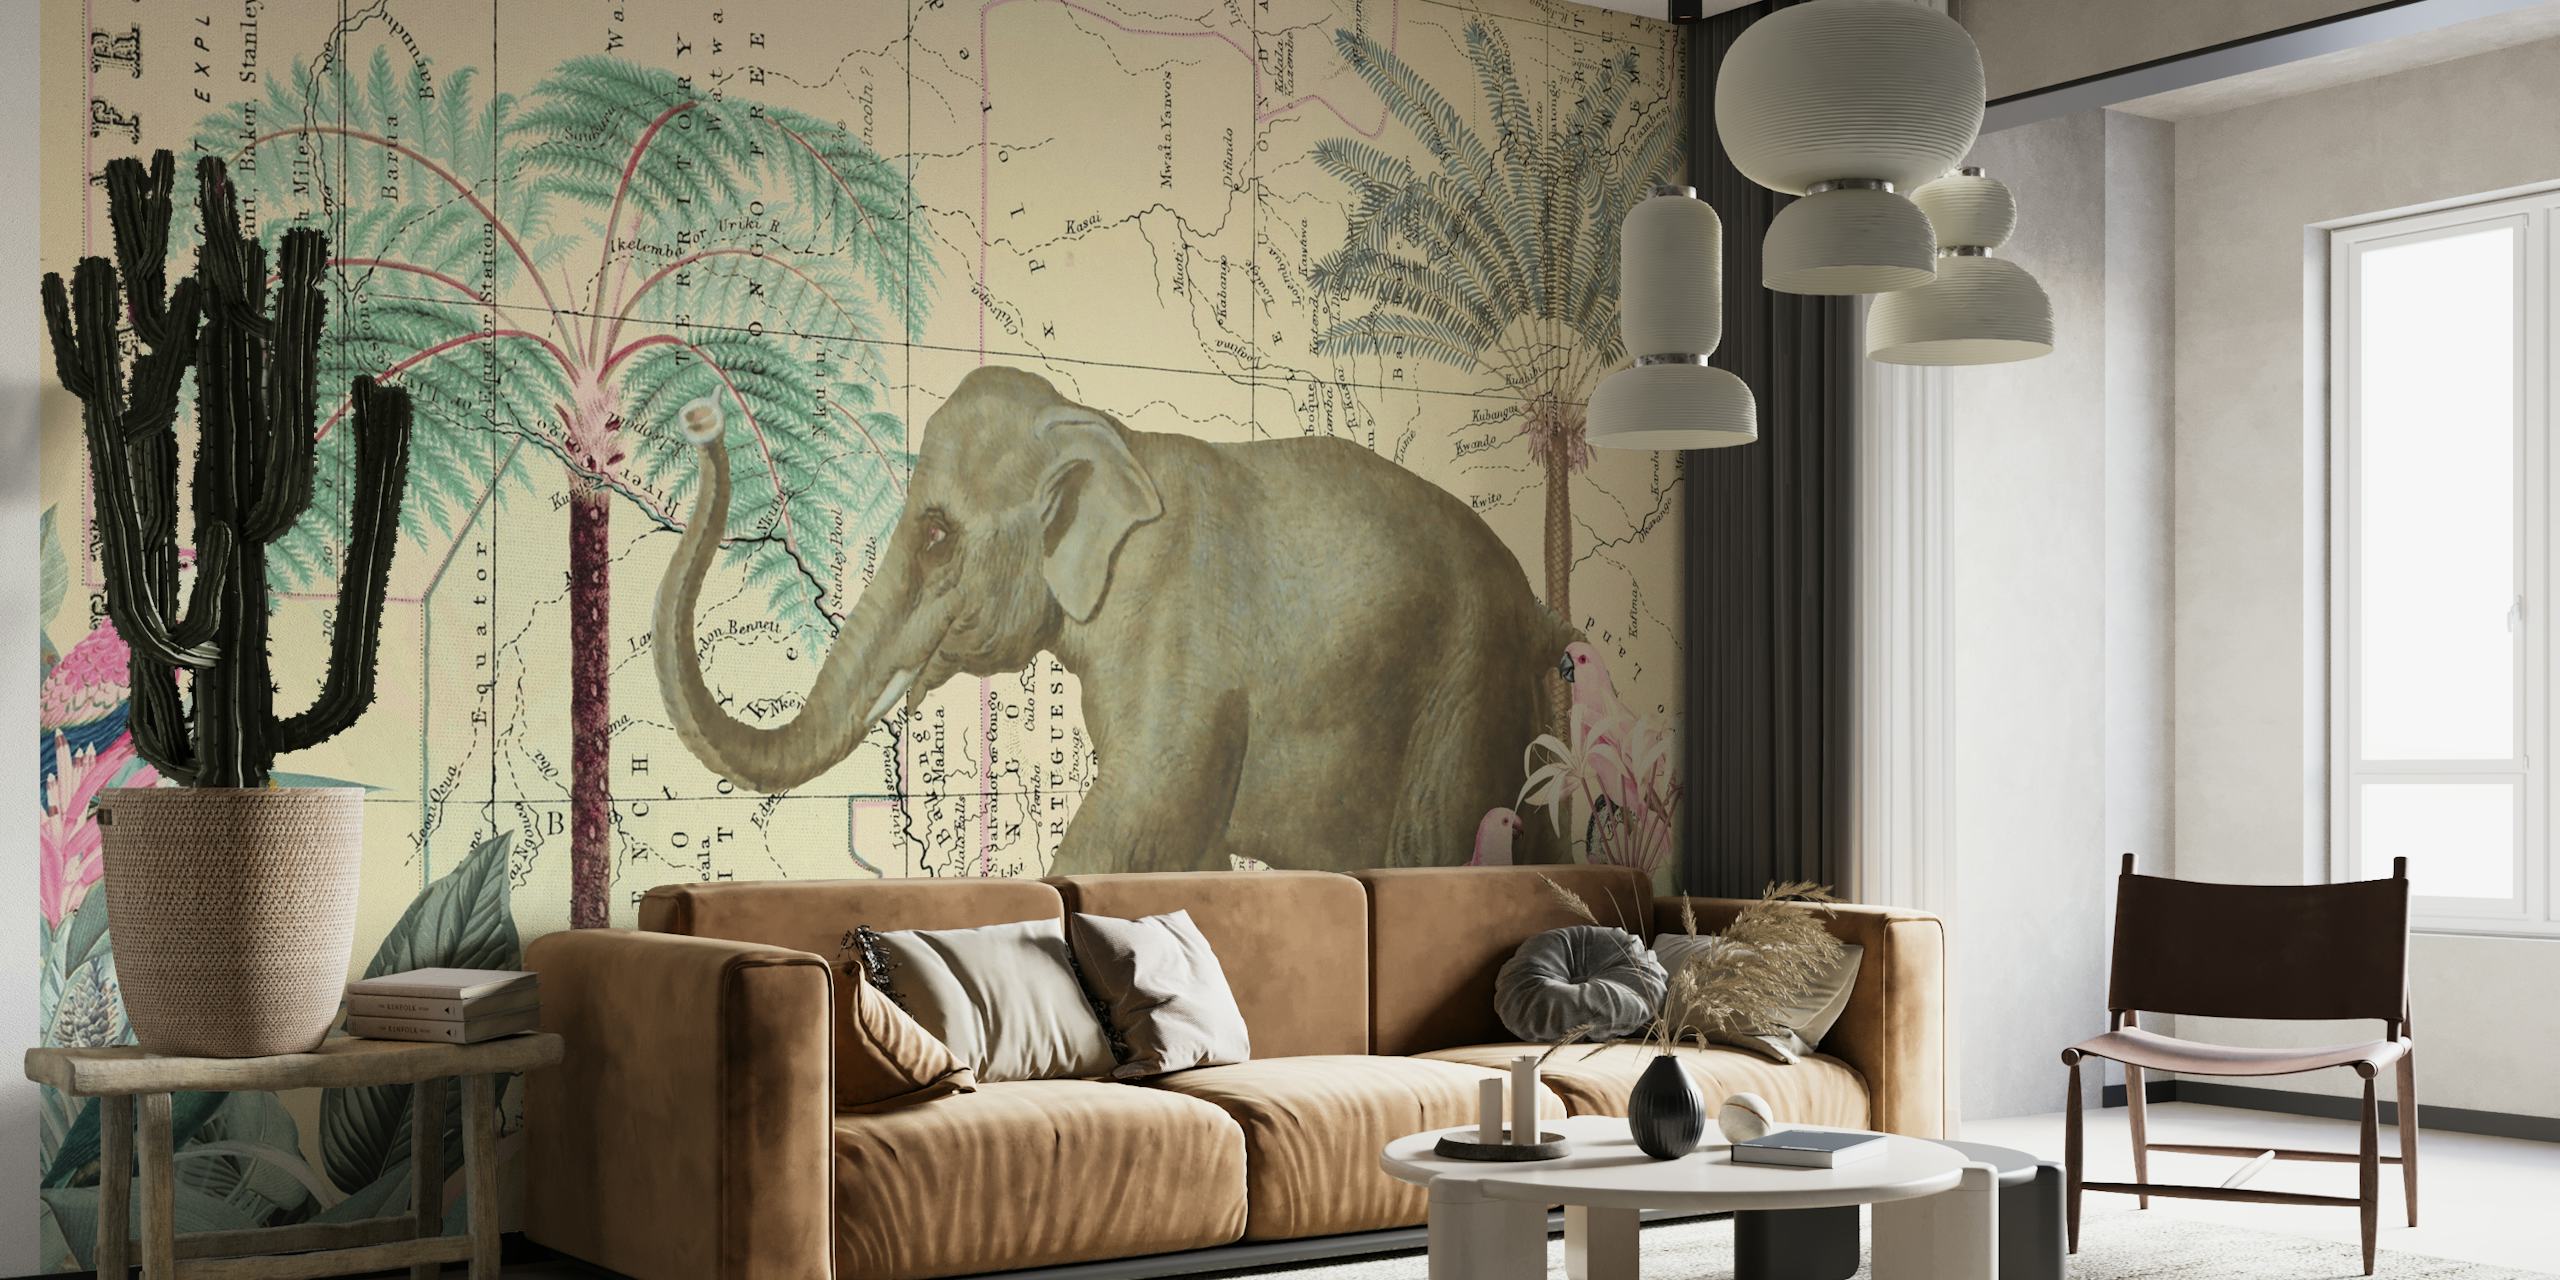 The Elephants Journey wallpaper